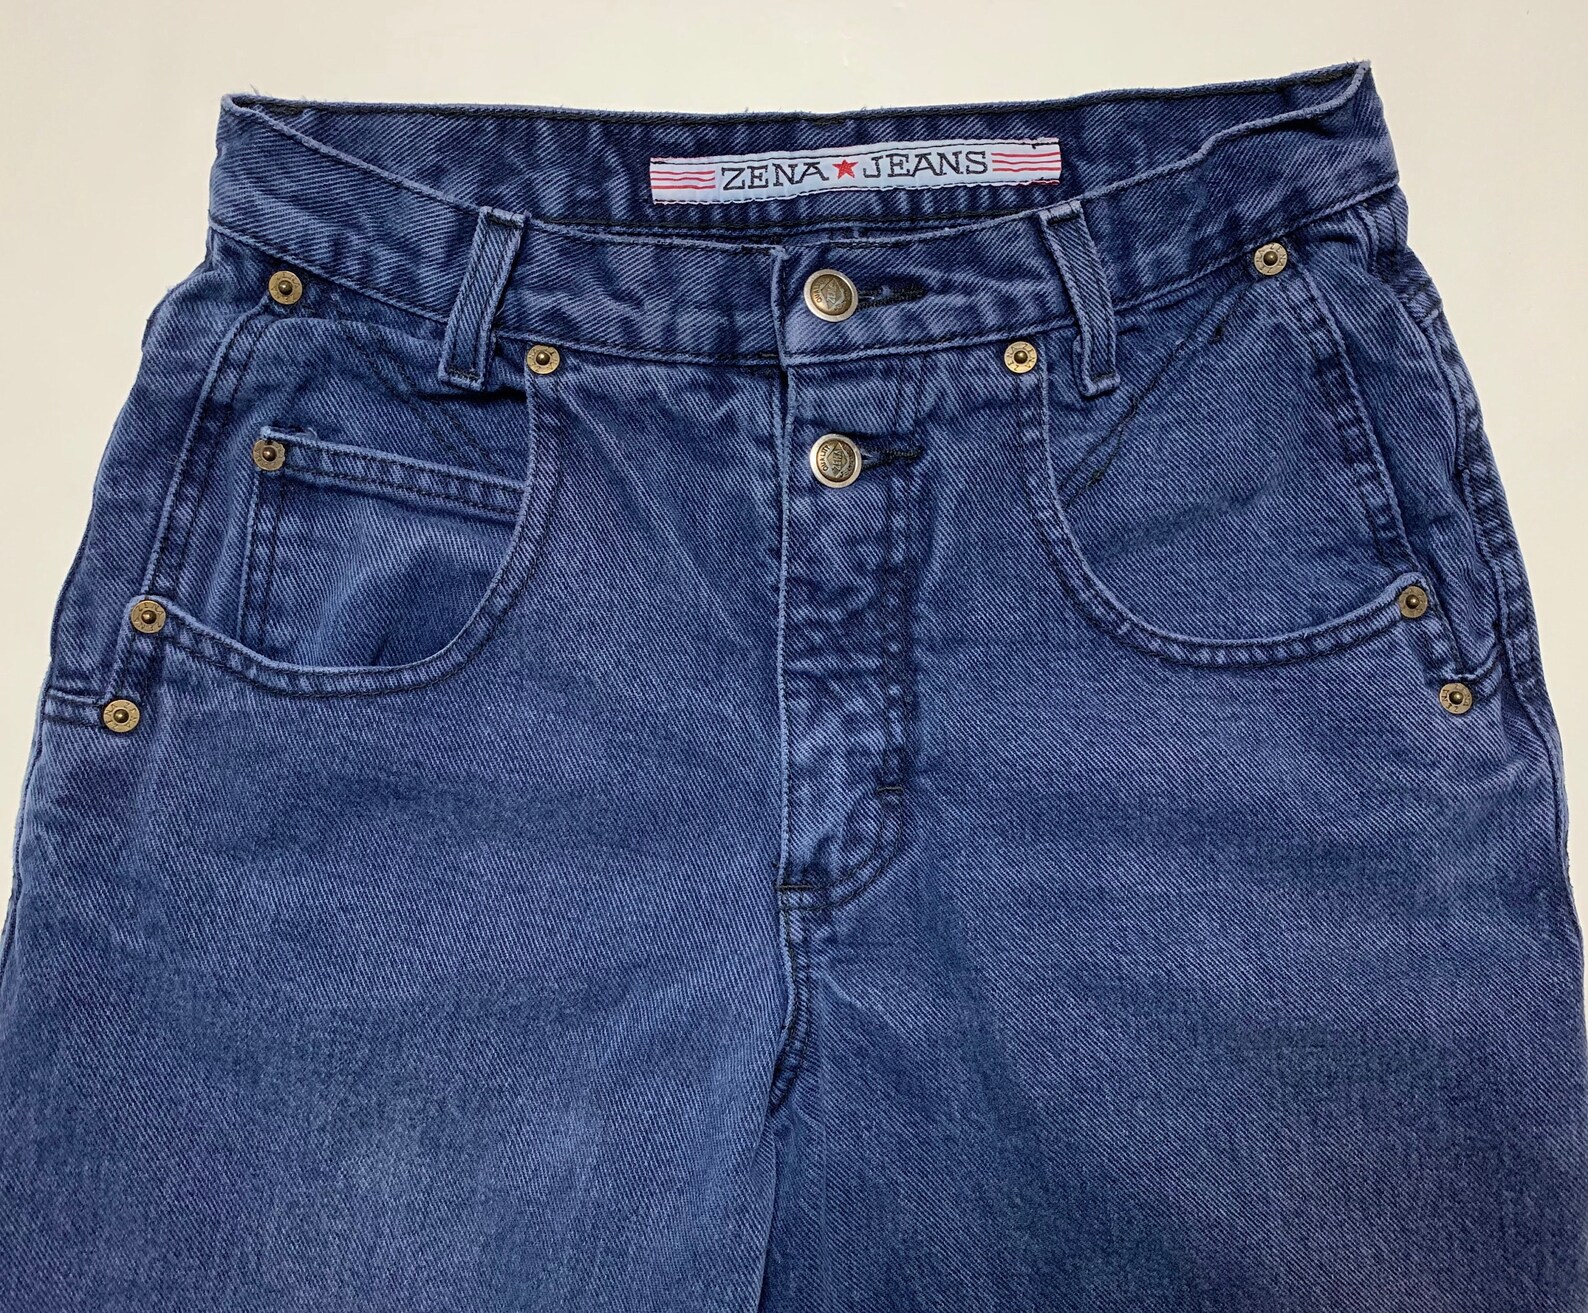 Vintage 1980s/1990s ZENA Jeans Measure 27 X 29.75 Tapered | Etsy